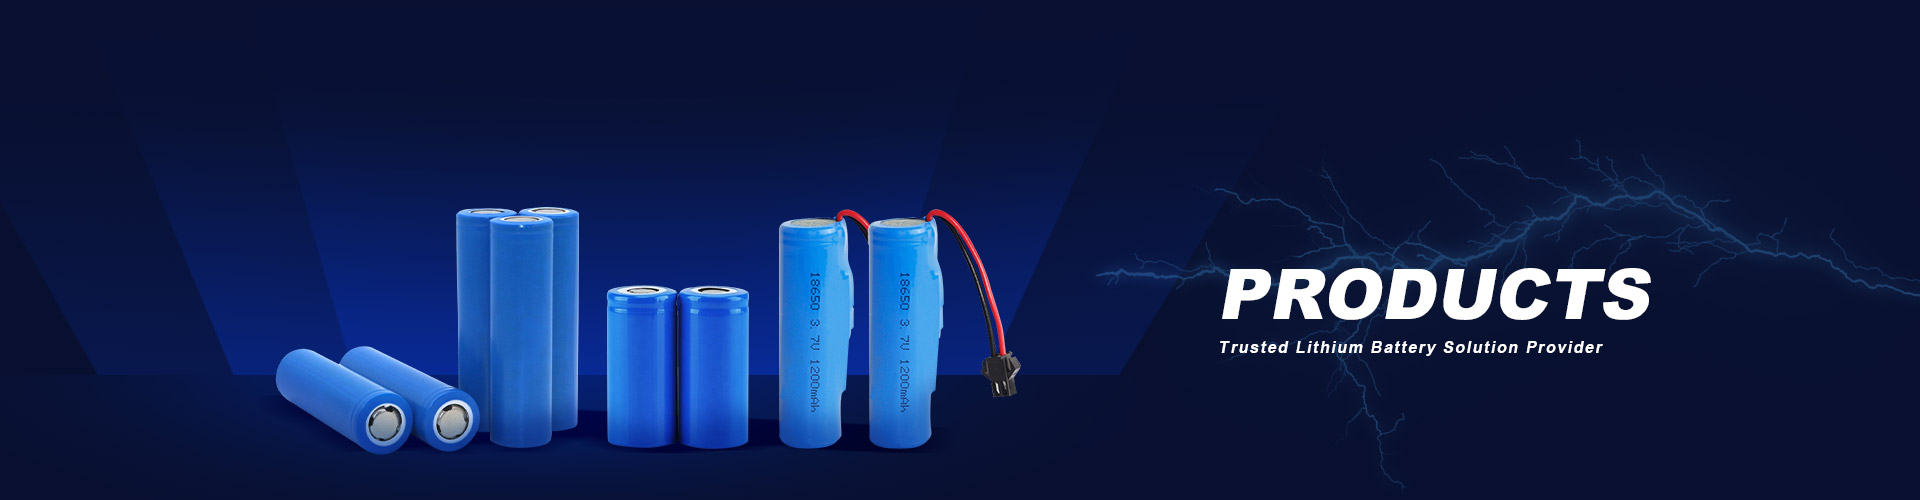 Standard  lithium polymer battery